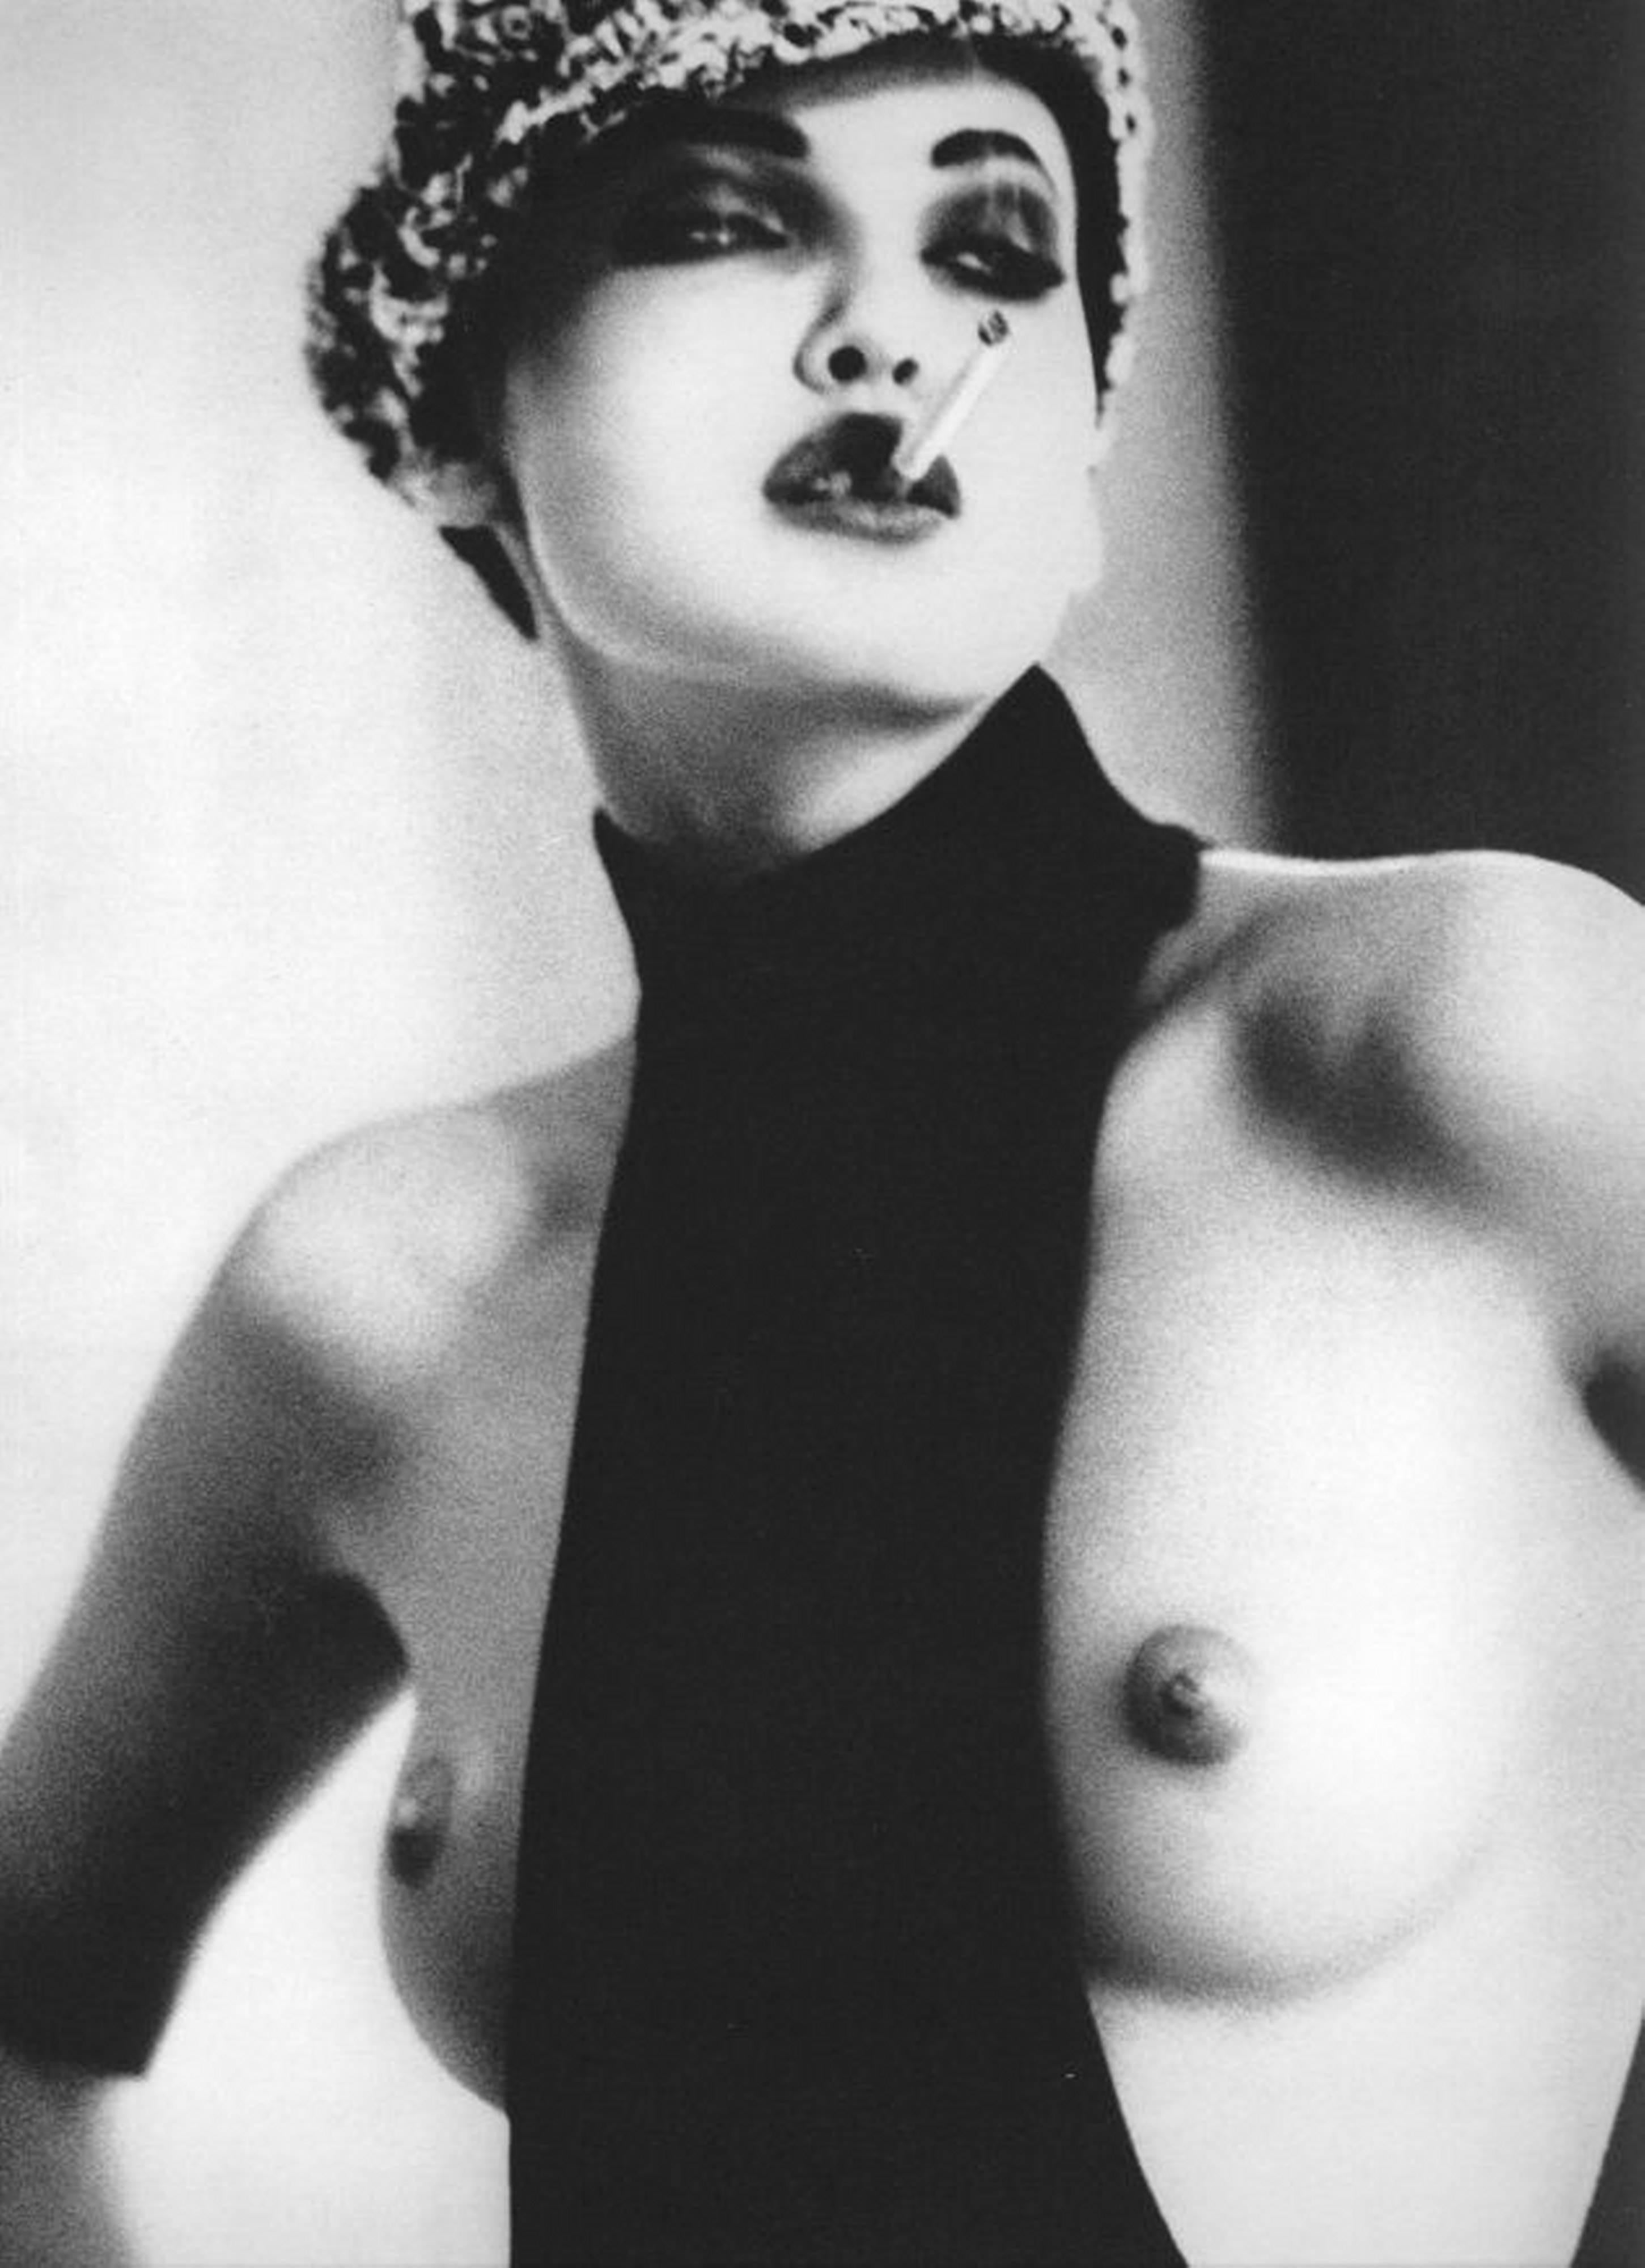 Nadja Auermann, Smoke - nude portrait with cigarette, fine art photography